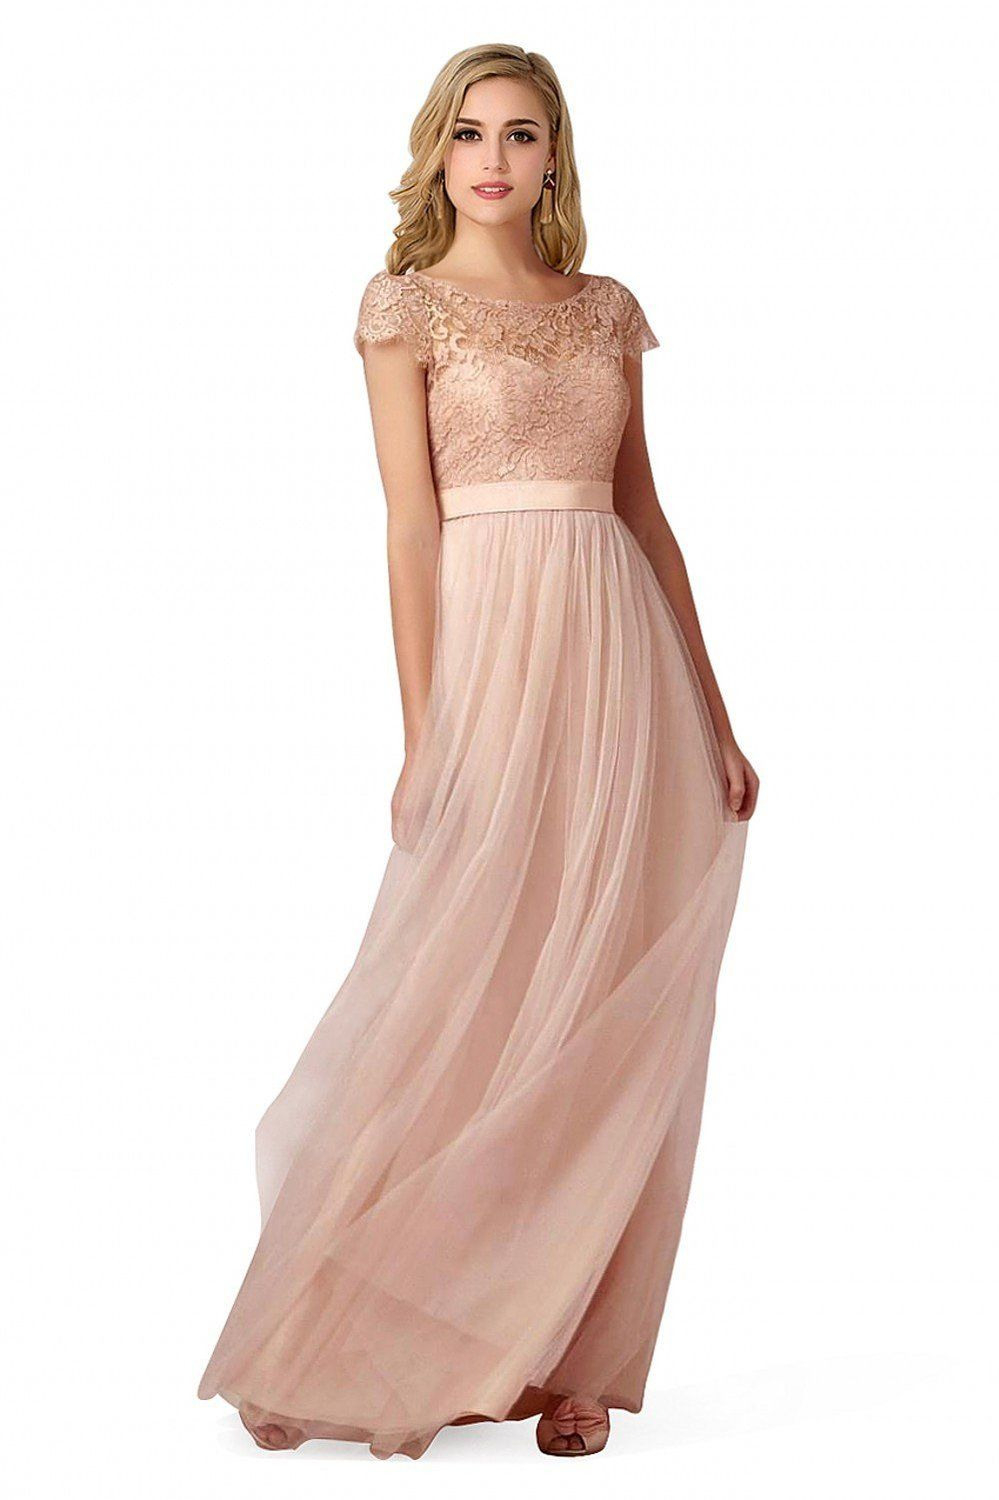 Elegant Abend Kleid Bei Amazon Vertrieb10 Luxurius Abend Kleid Bei Amazon für 2019